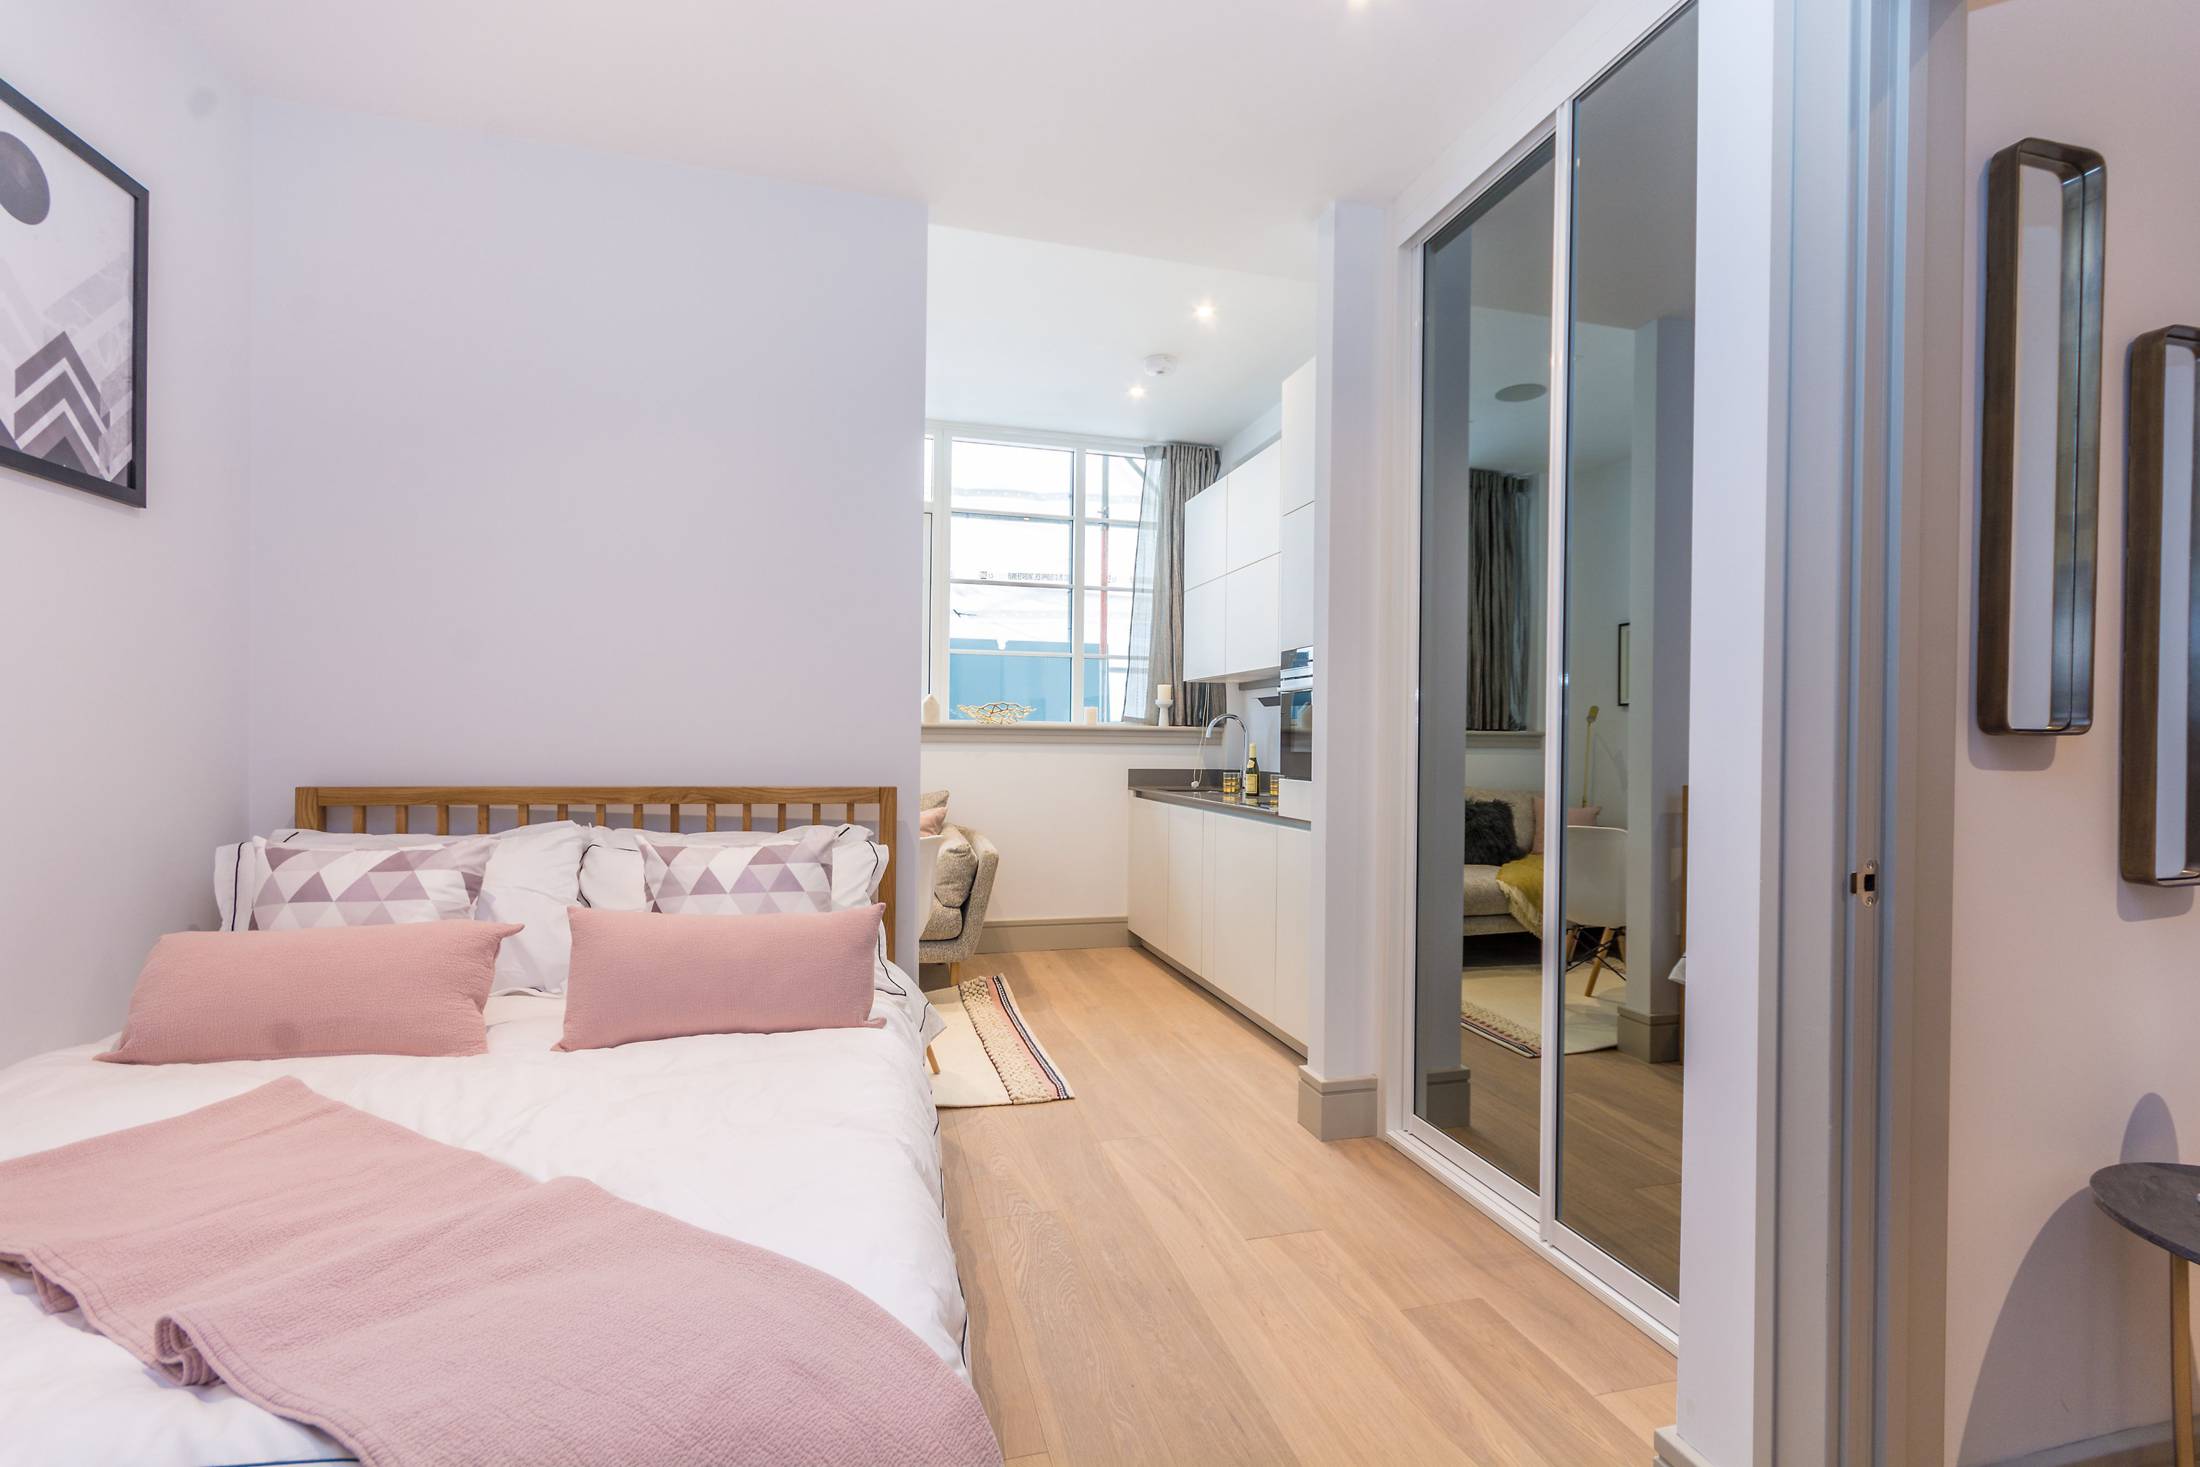 Cheviot House, Whitechapel, London E1, interior, comfortable bedroom space, studio living